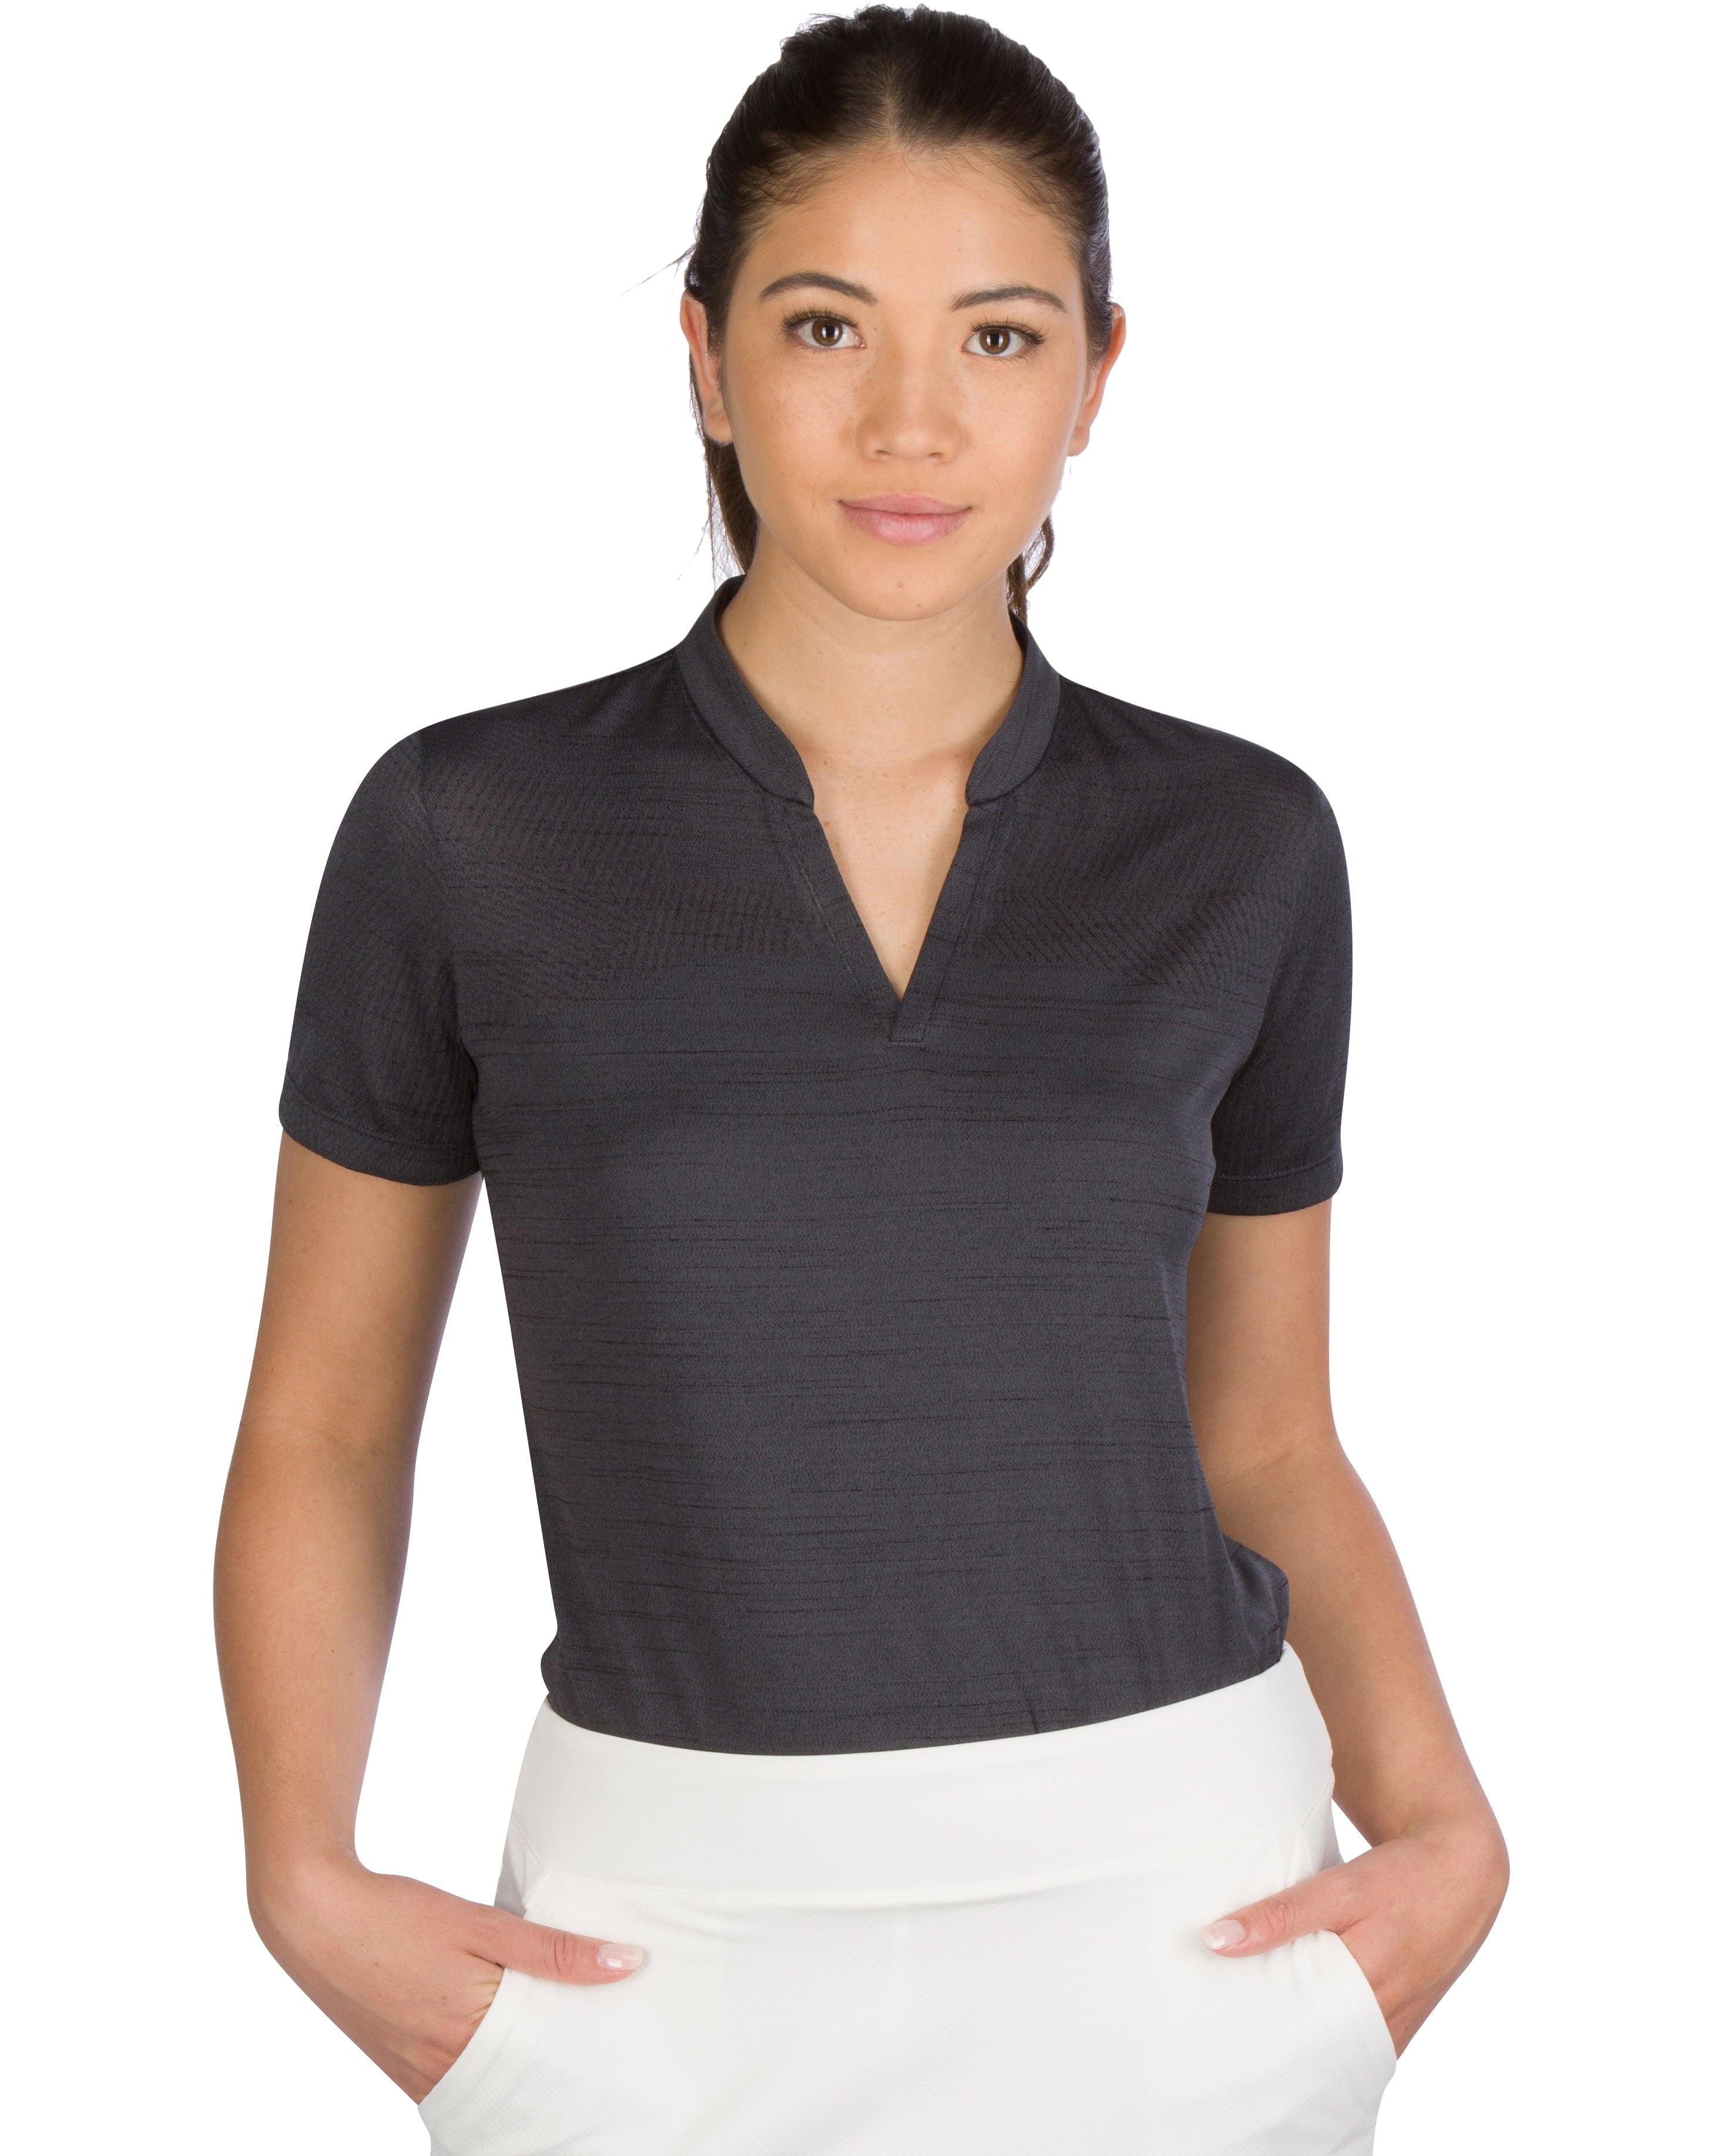 mimik kabul ideal olarak womens golf shirts - ncaeec.org